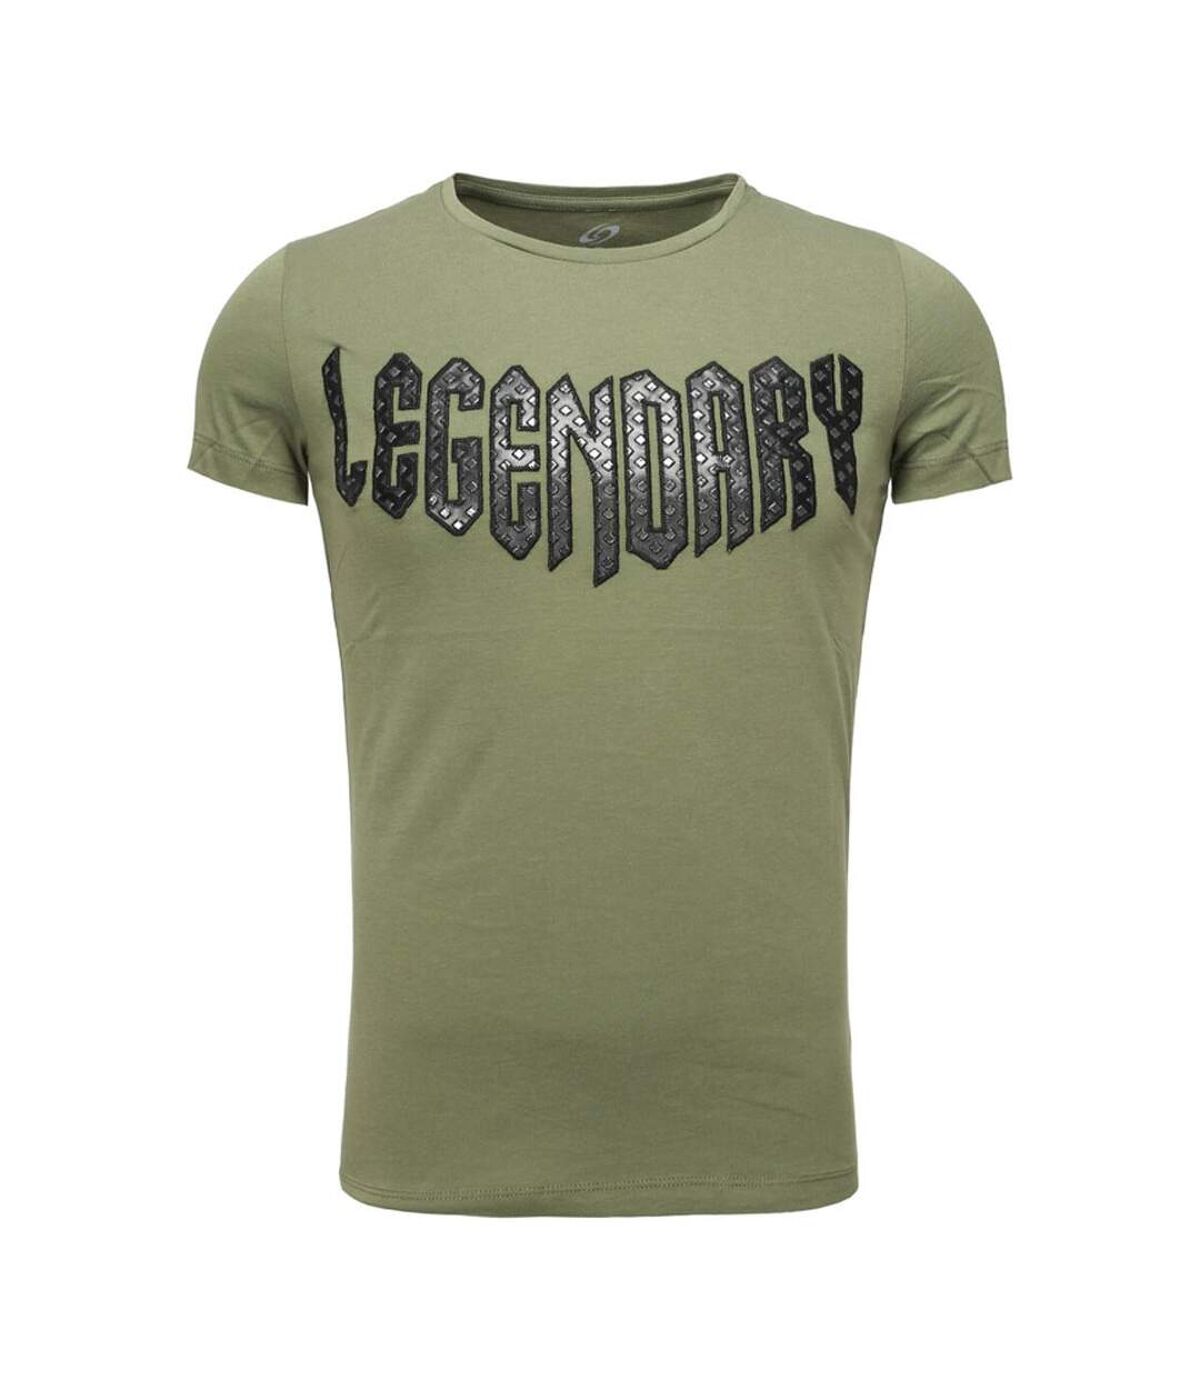 T-shirt fashion legendary T-shirt 4319 vert kaki